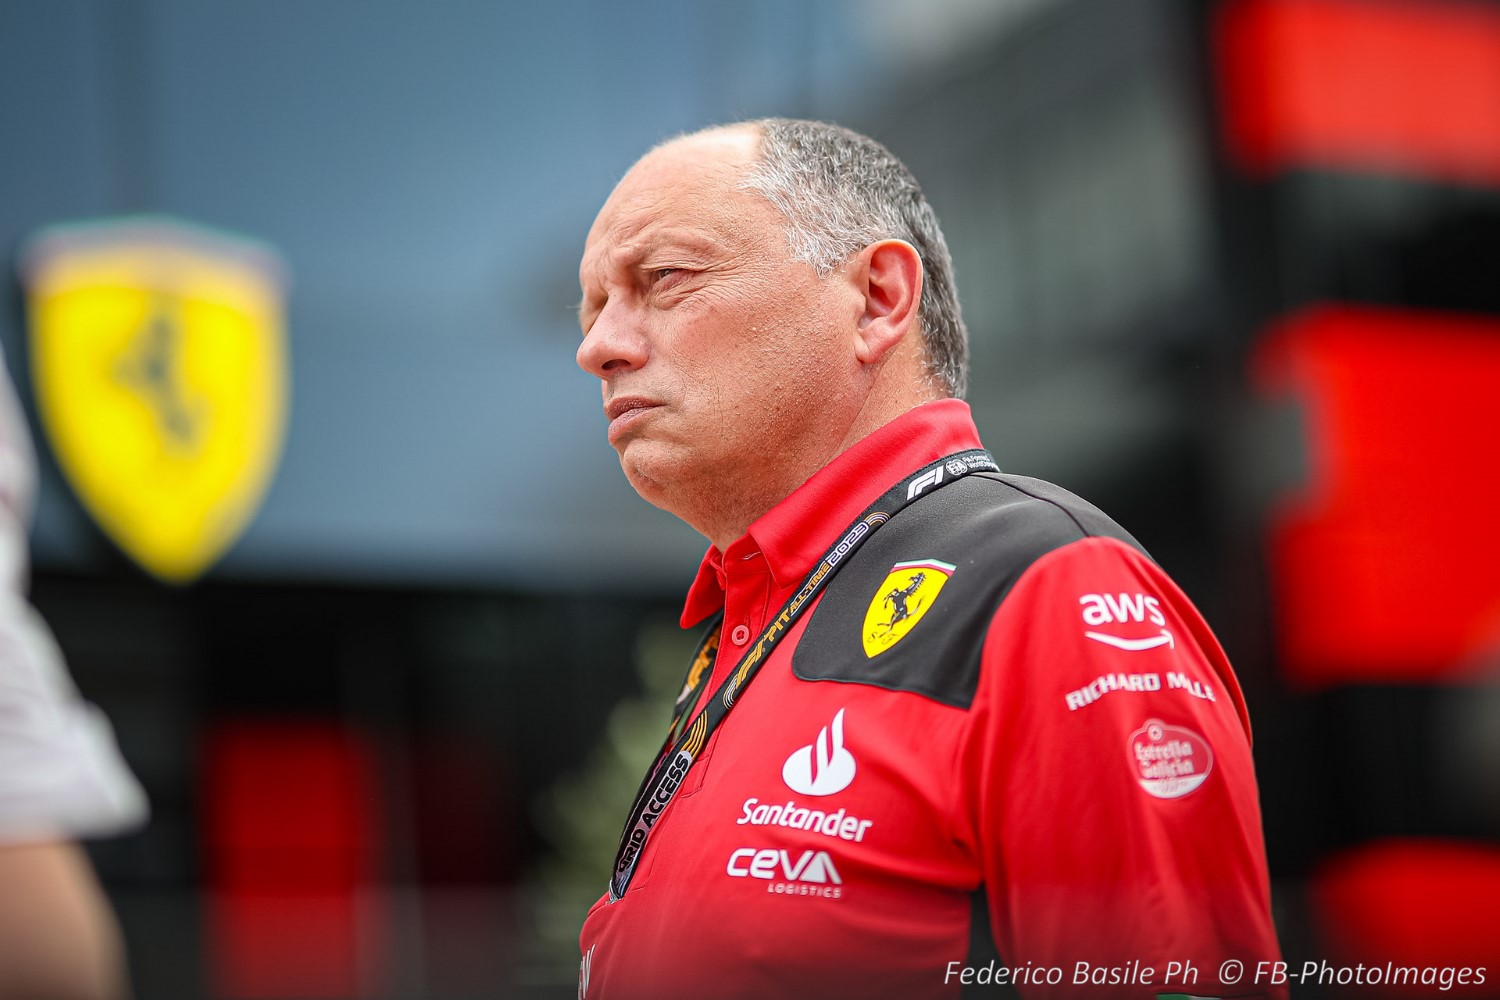 Frederic Vasseur Team Principal of the Scuderia Ferrari during the Hungarian GP, Budapest 20-23 July 2023 at the Hungaroring, Formula 1 World championship 2023.